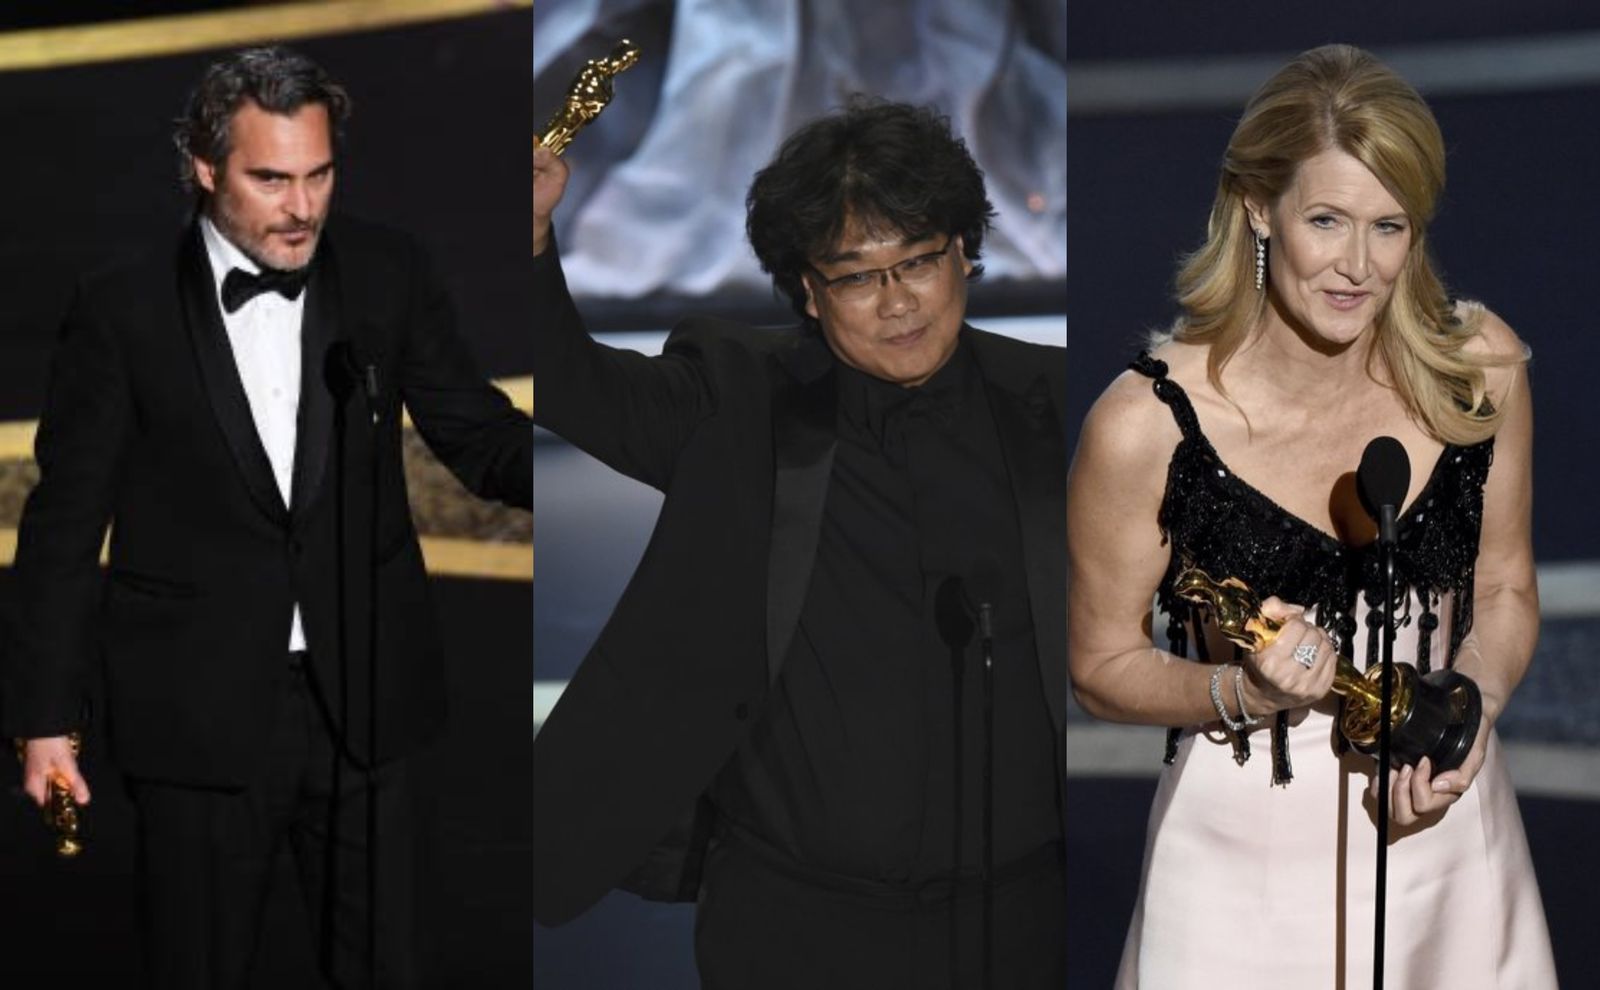 Oscars Viewership Plummets In 2020 Despite A Historic Awards Night, The Dip Shocks The Academy